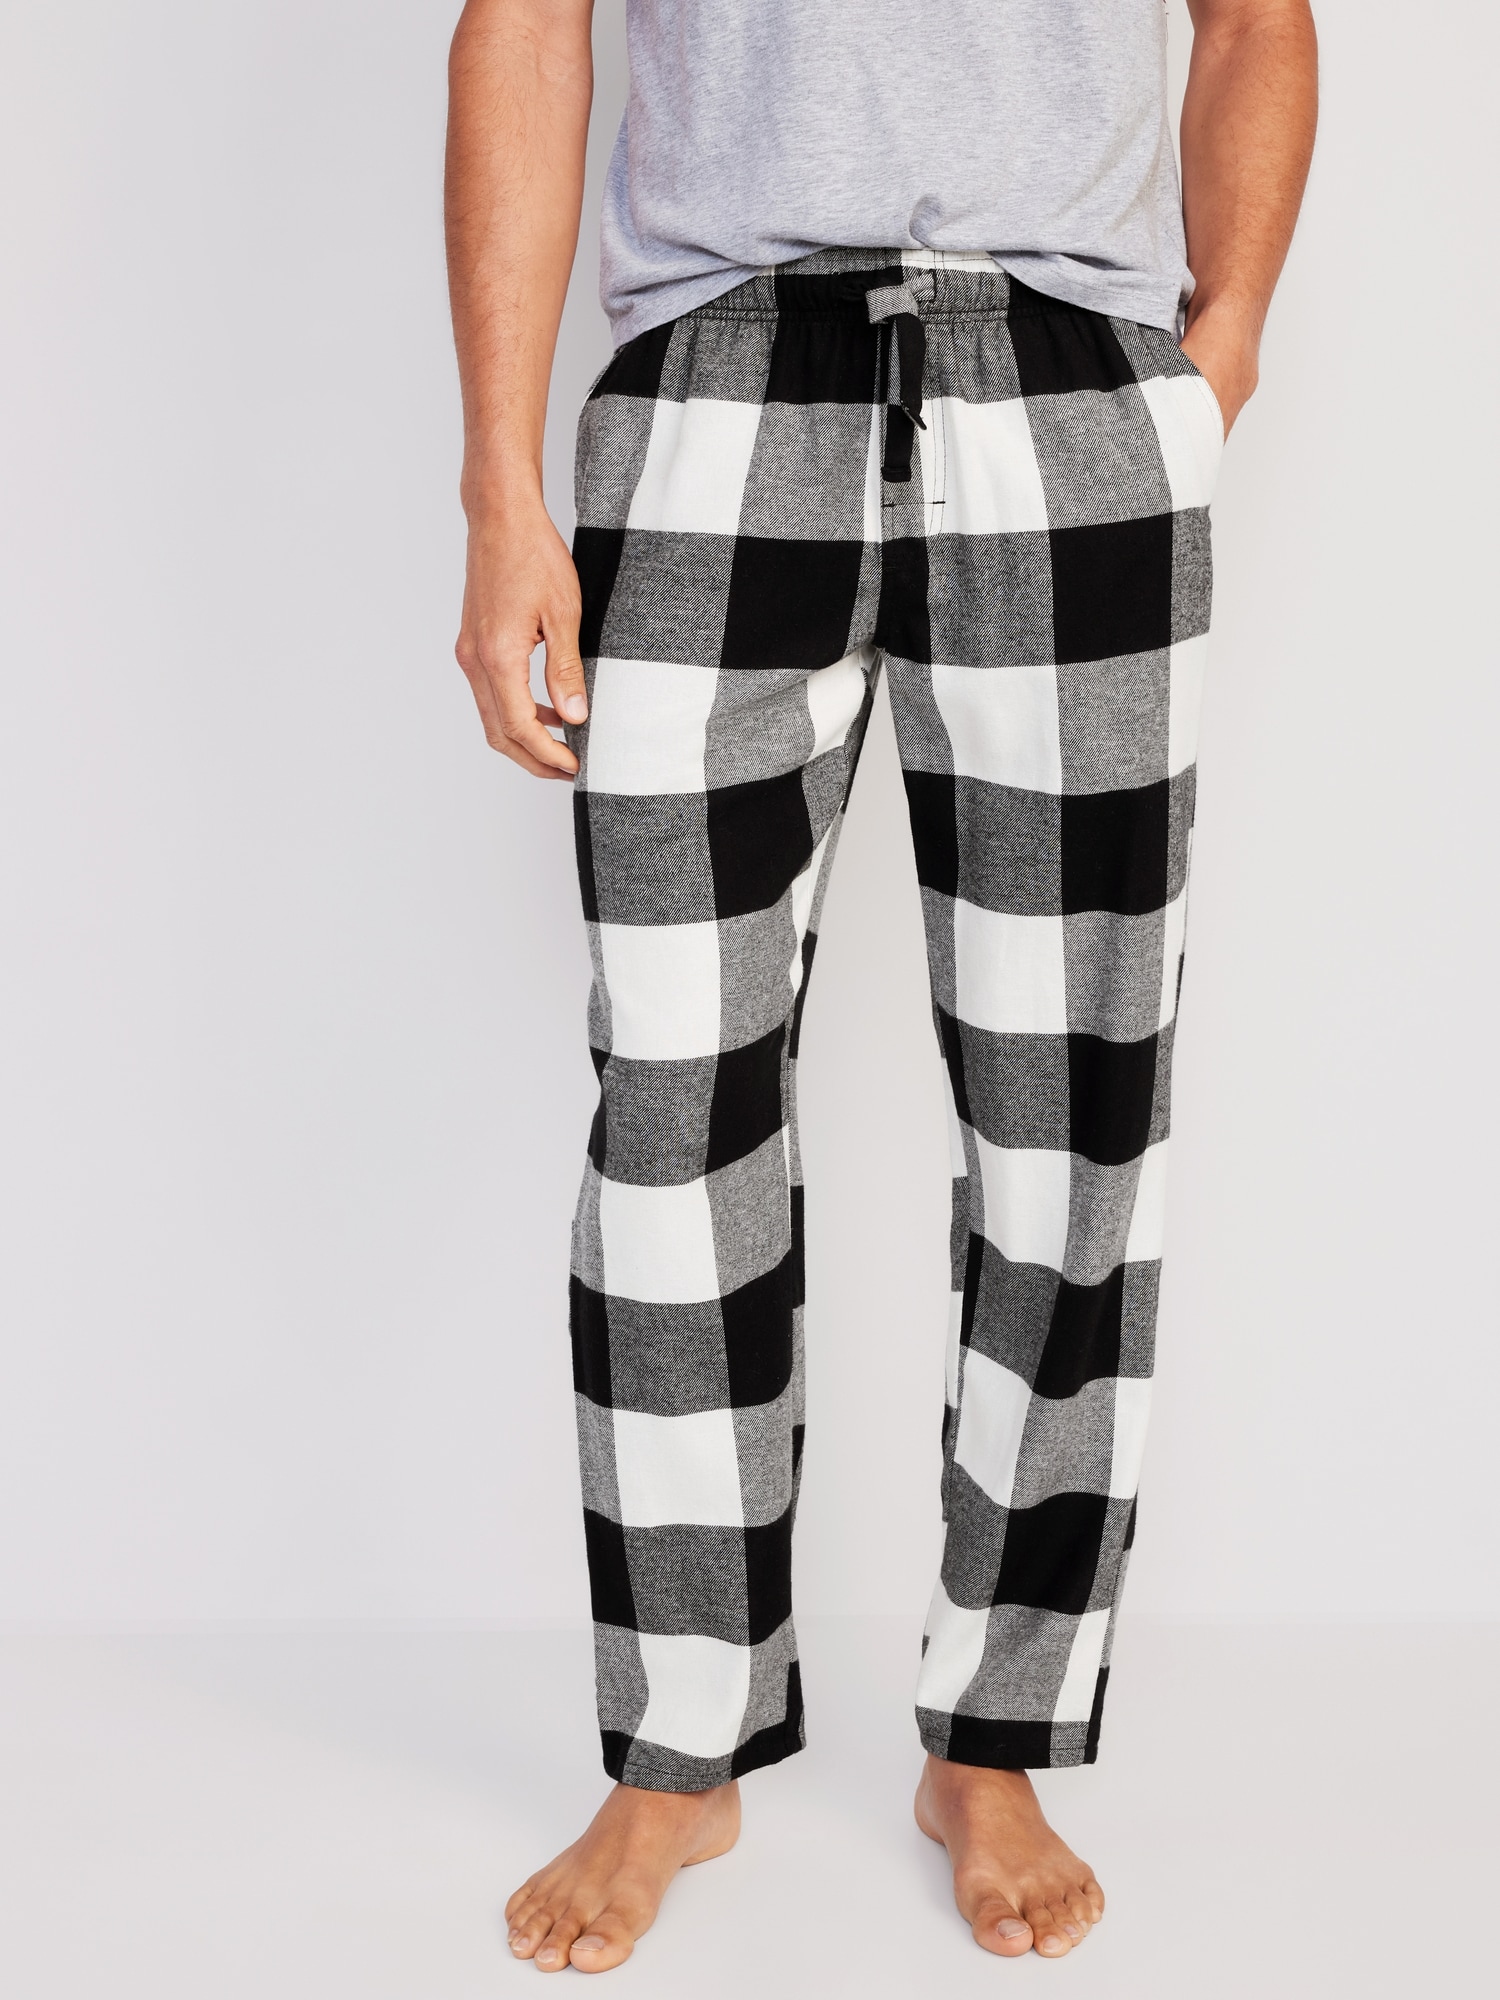 Matching Flannel Pajama Pants